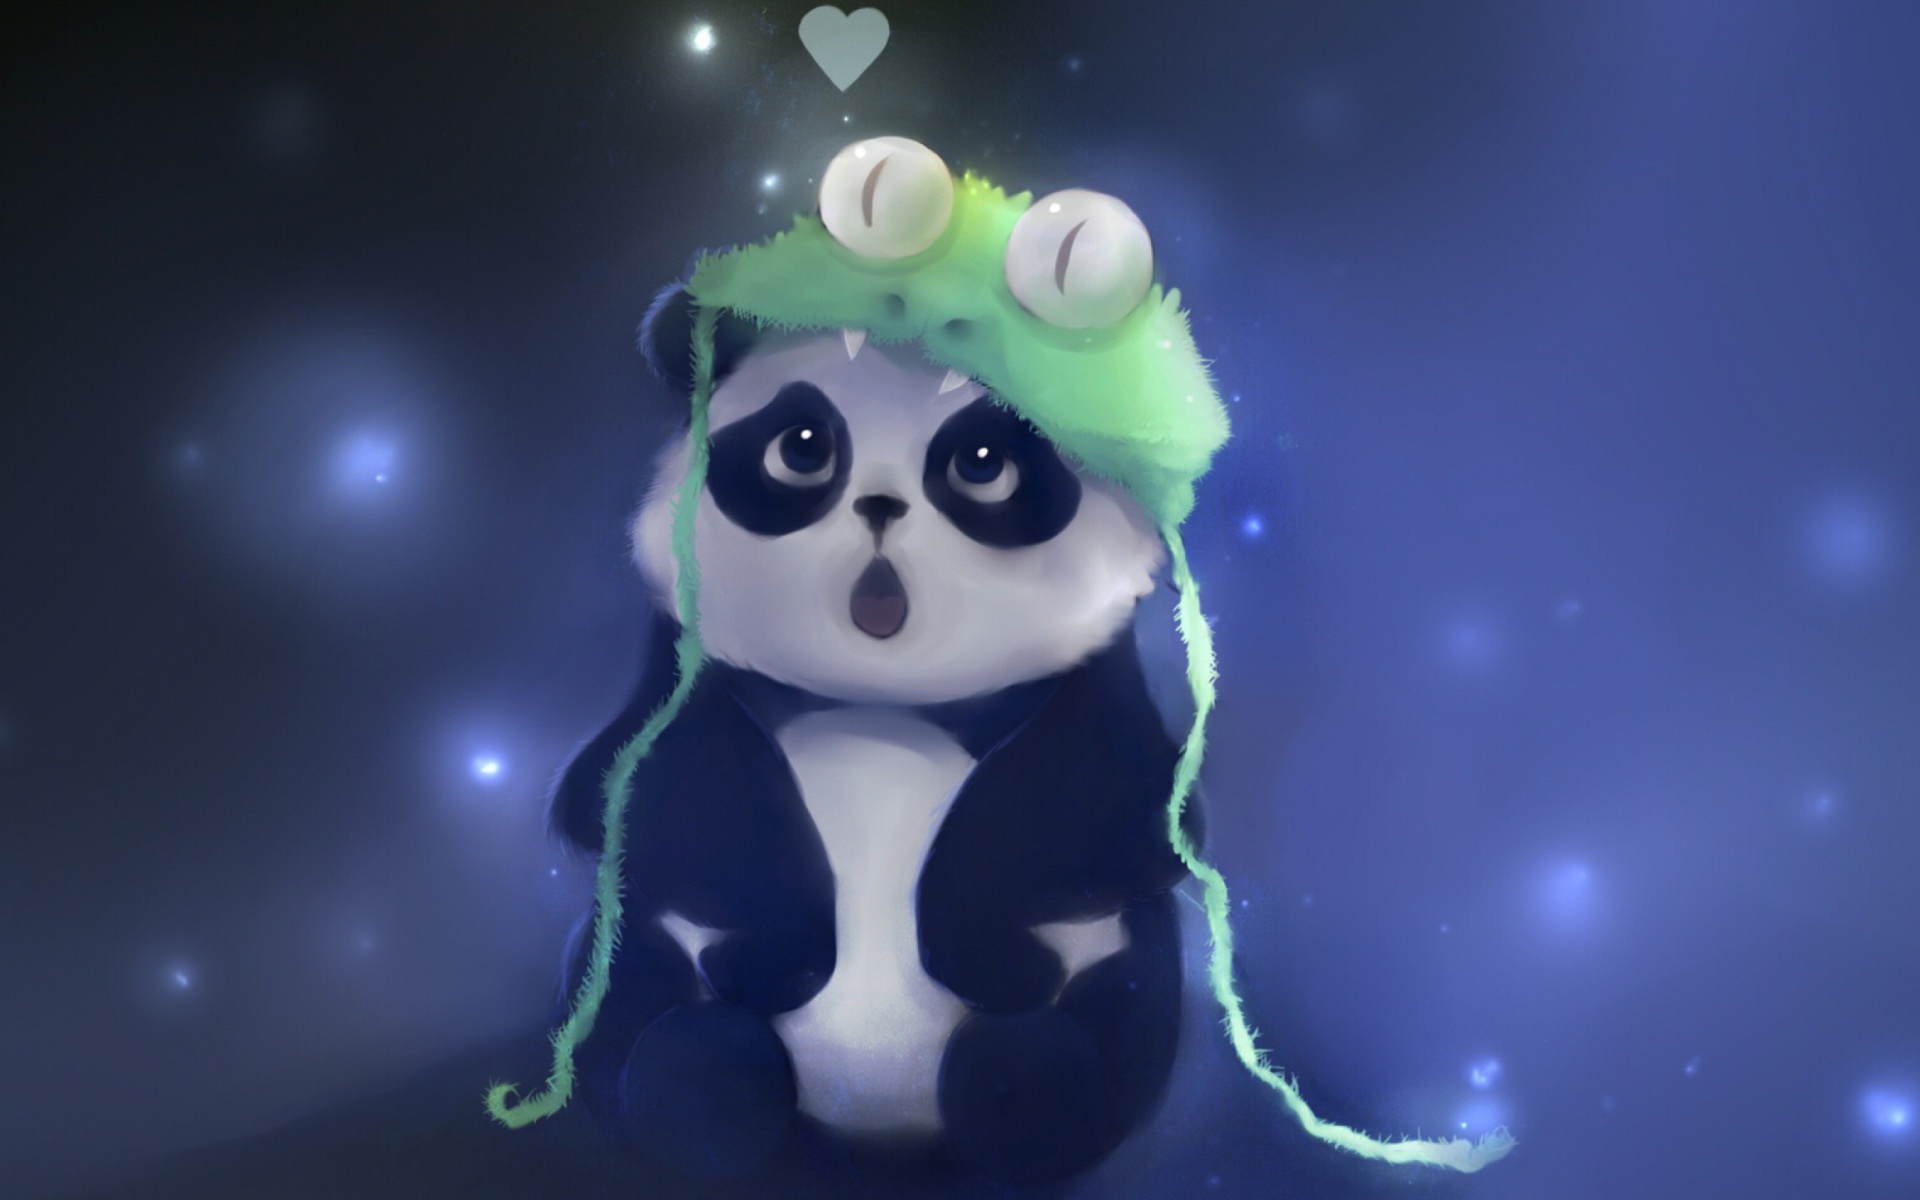 Cute Baby Panda Painting Wallpaper Image